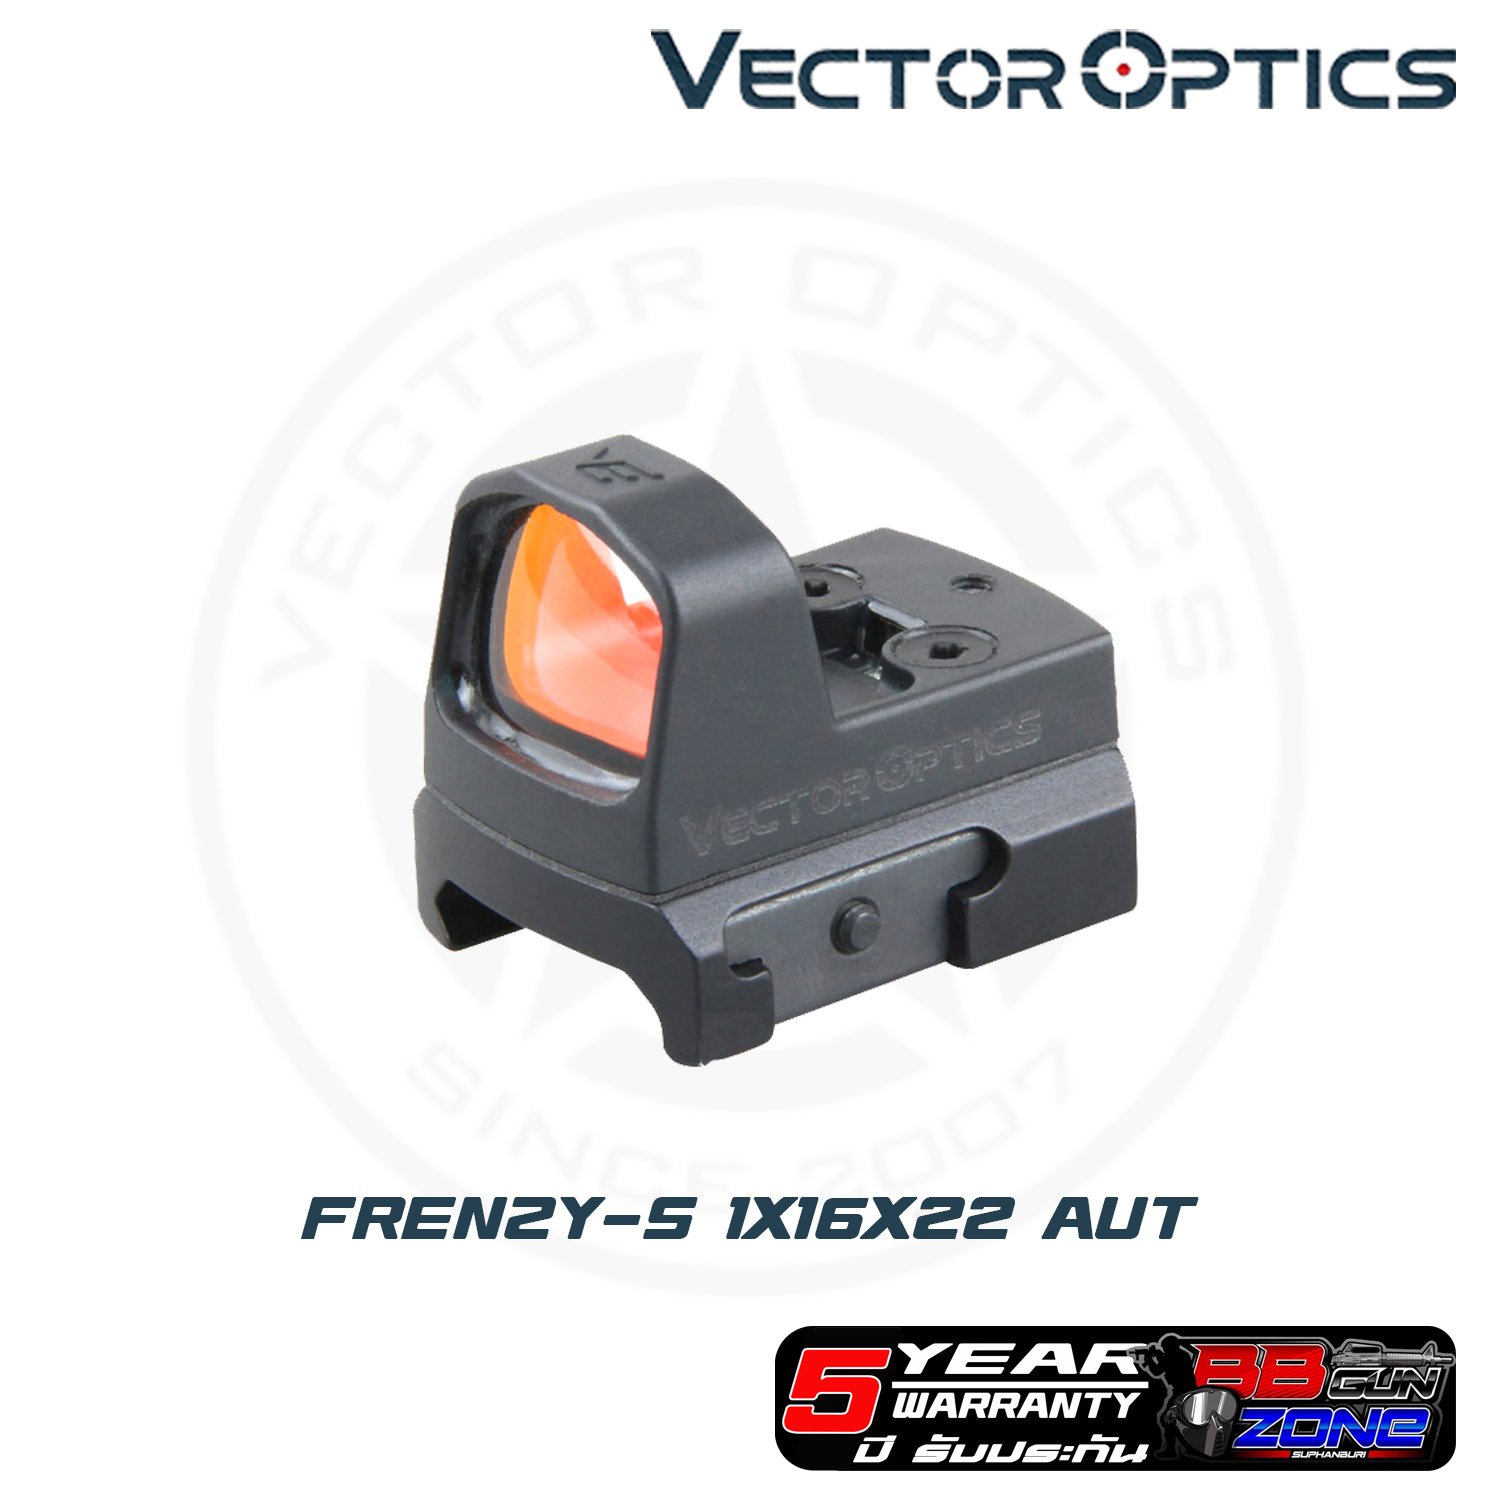 Vector Optics Victoptics Frenzy-S 1x16x22 AUT